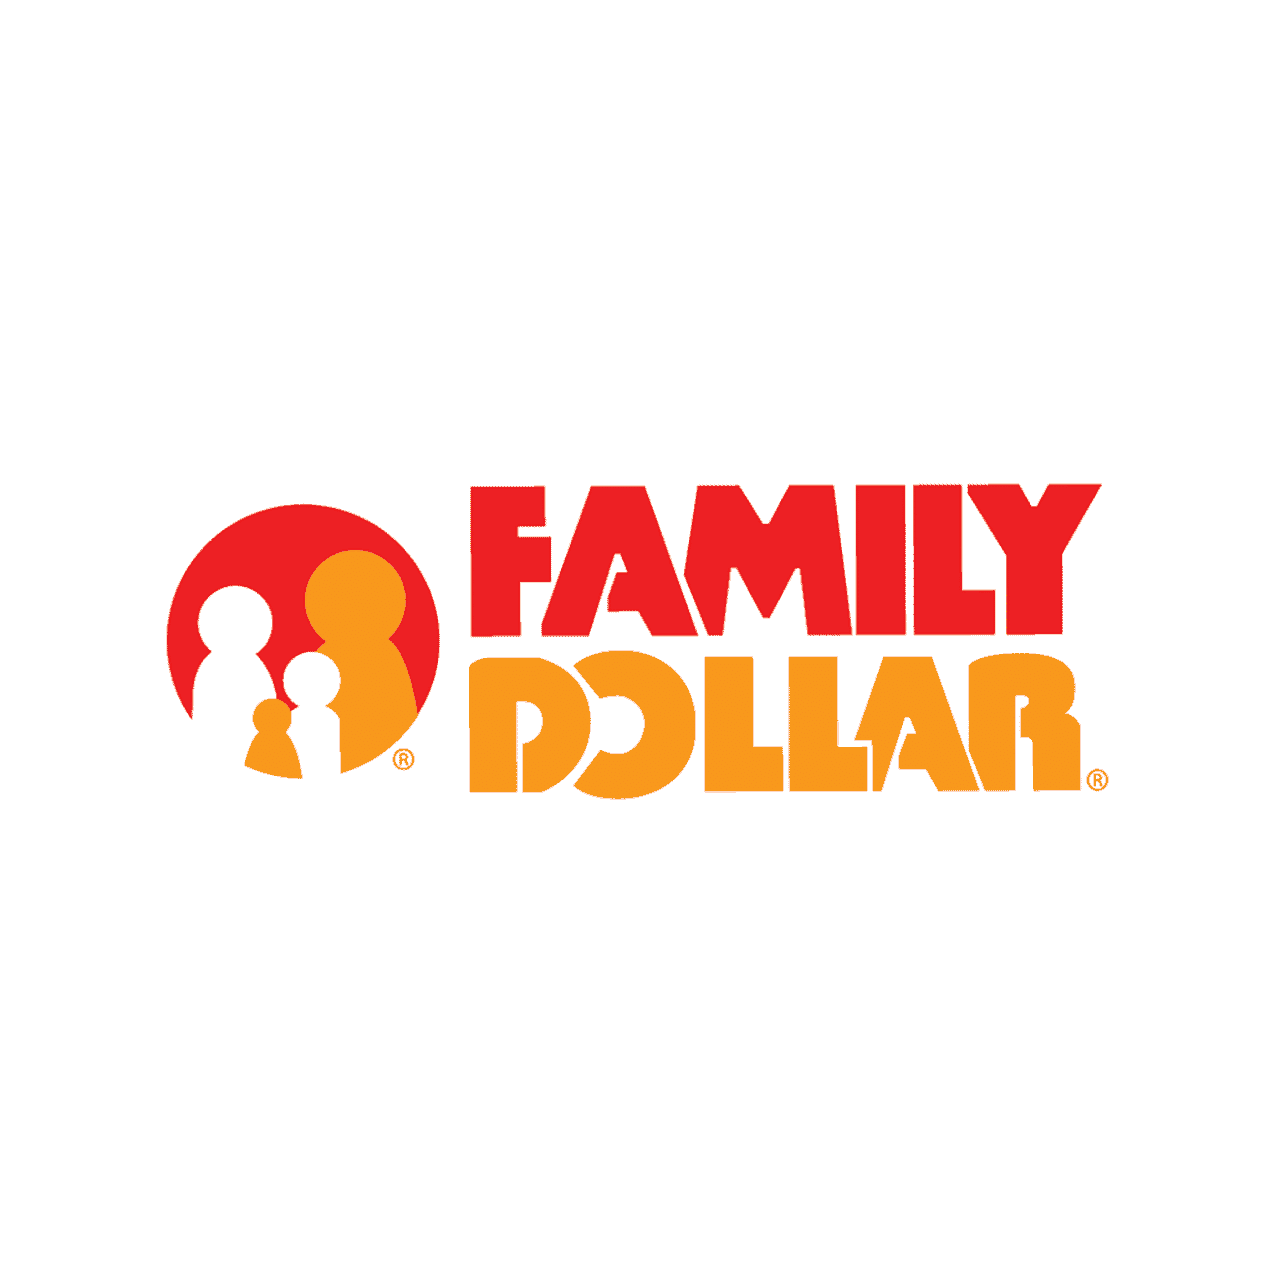 family dollar logo